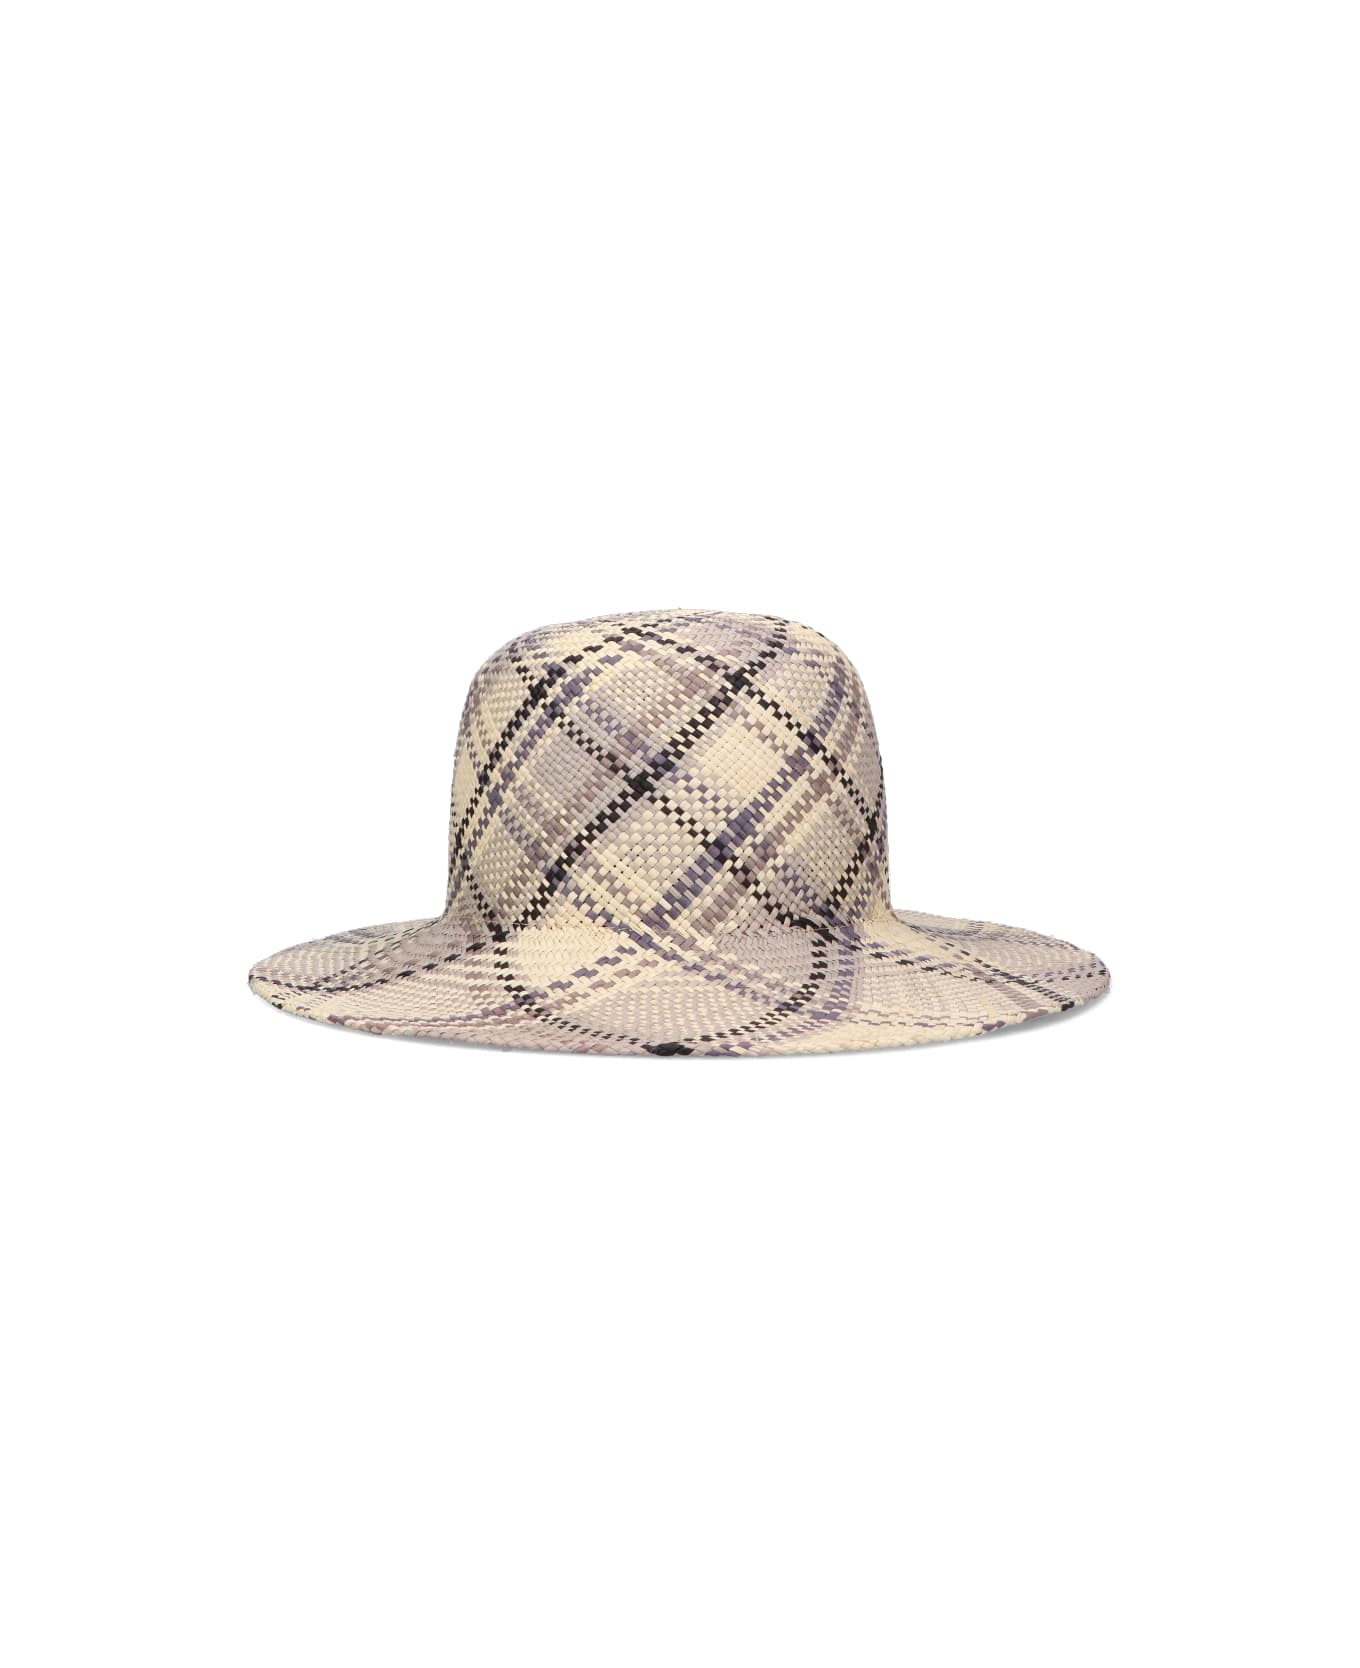 Thom Browne 'madras' Straw Hat - Beige 帽子